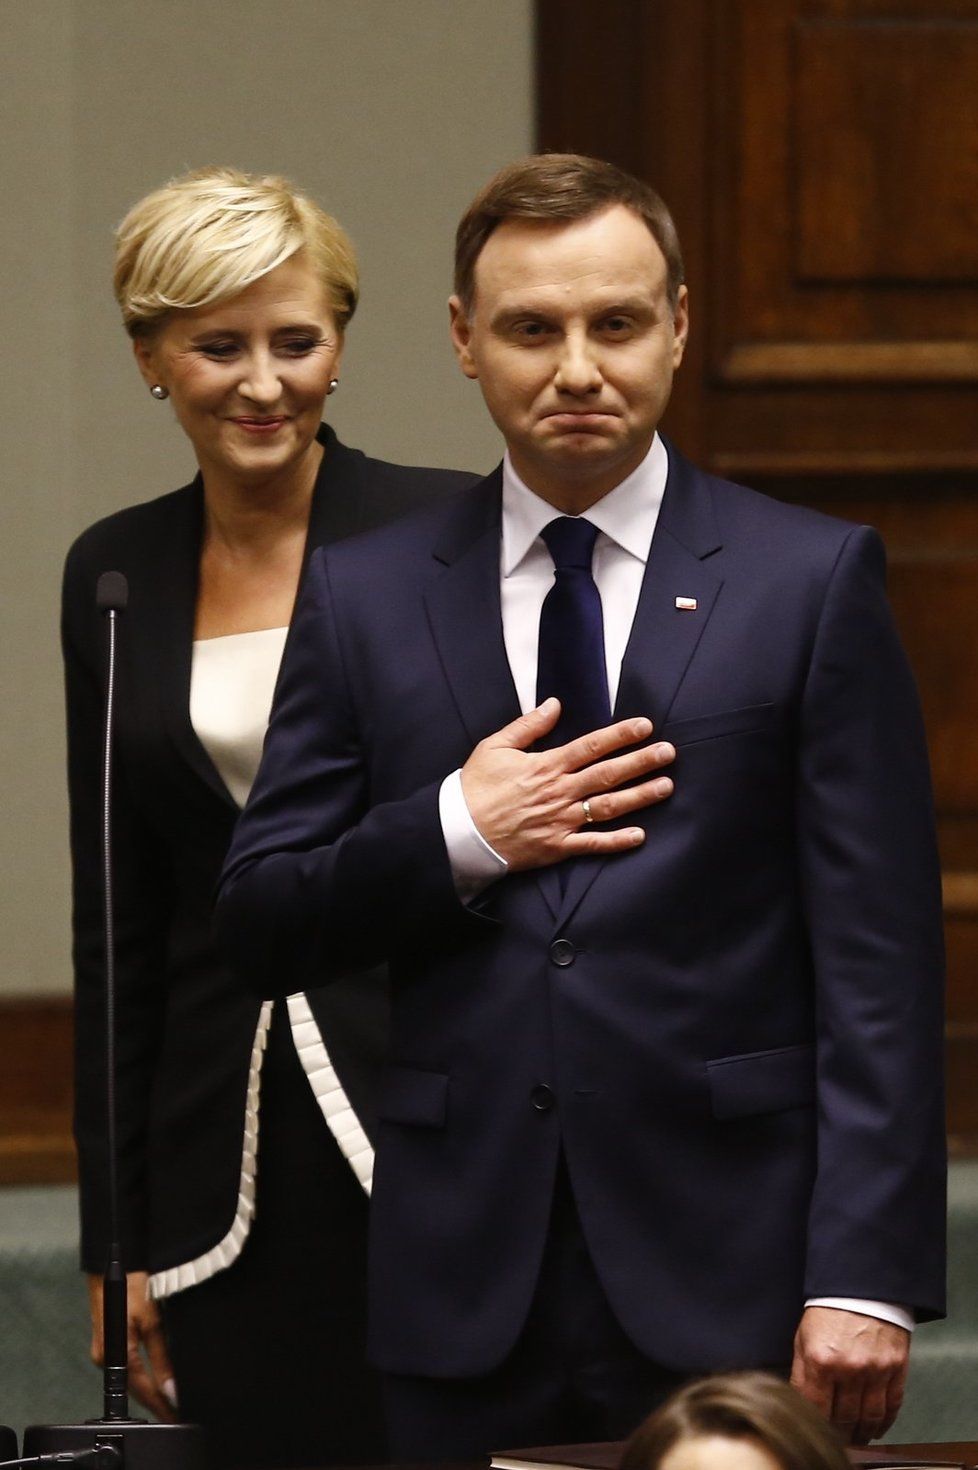 Andrezj Duda se svou manželku Agatou.